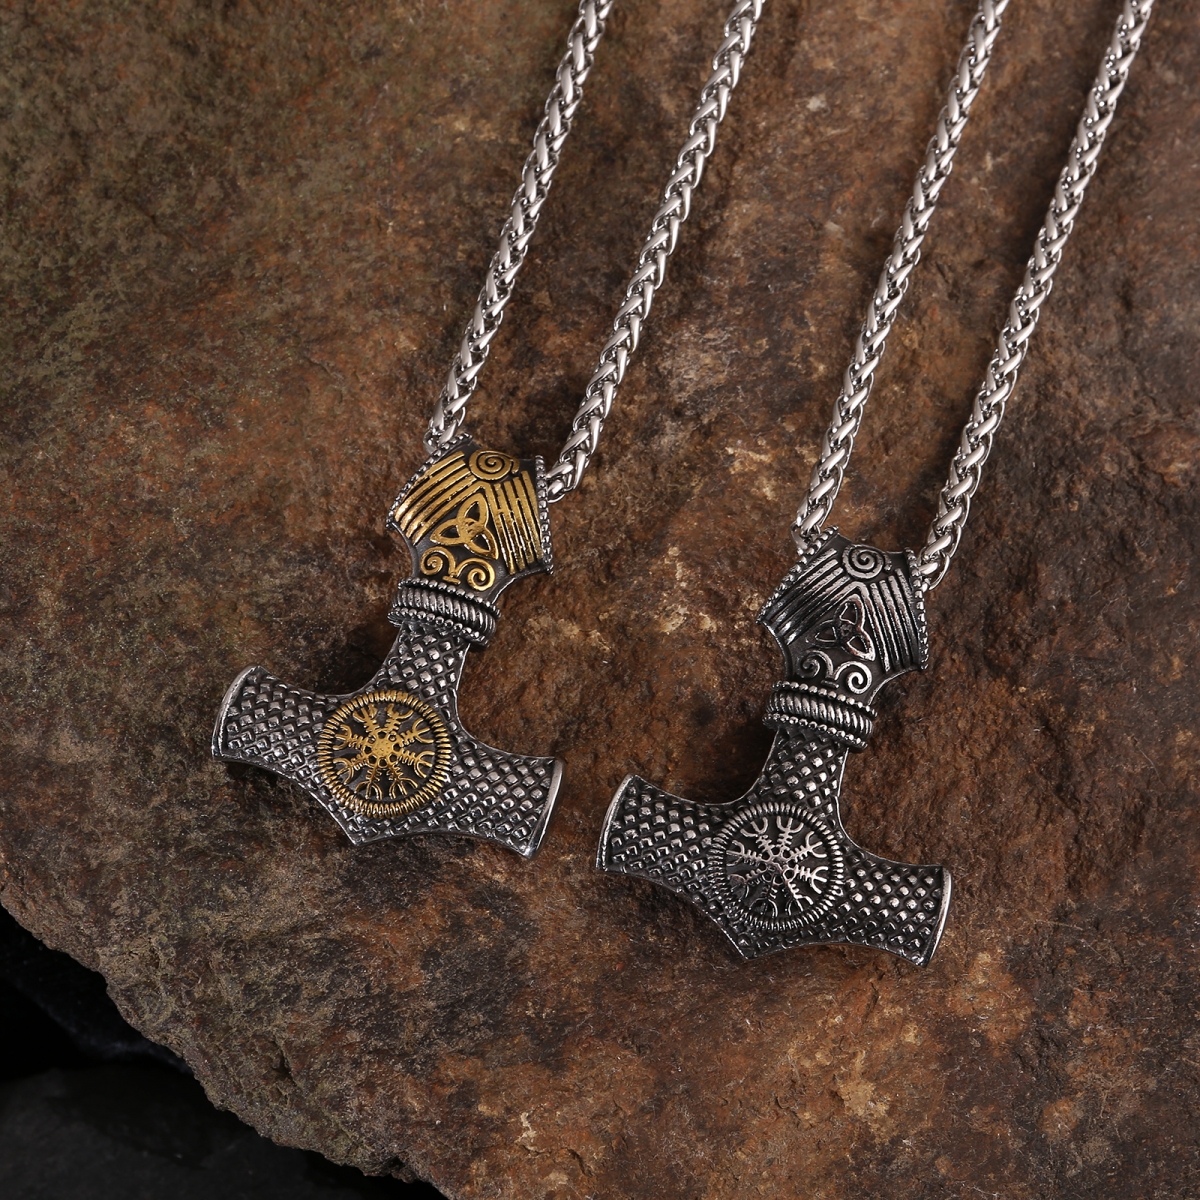 Viking jewelry inspired by Viking art and craft-NORSECOLLECTION- Viking Jewelry,Viking Necklace,Viking Bracelet,Viking Rings,Viking Mugs,Viking Accessories,Viking Crafts